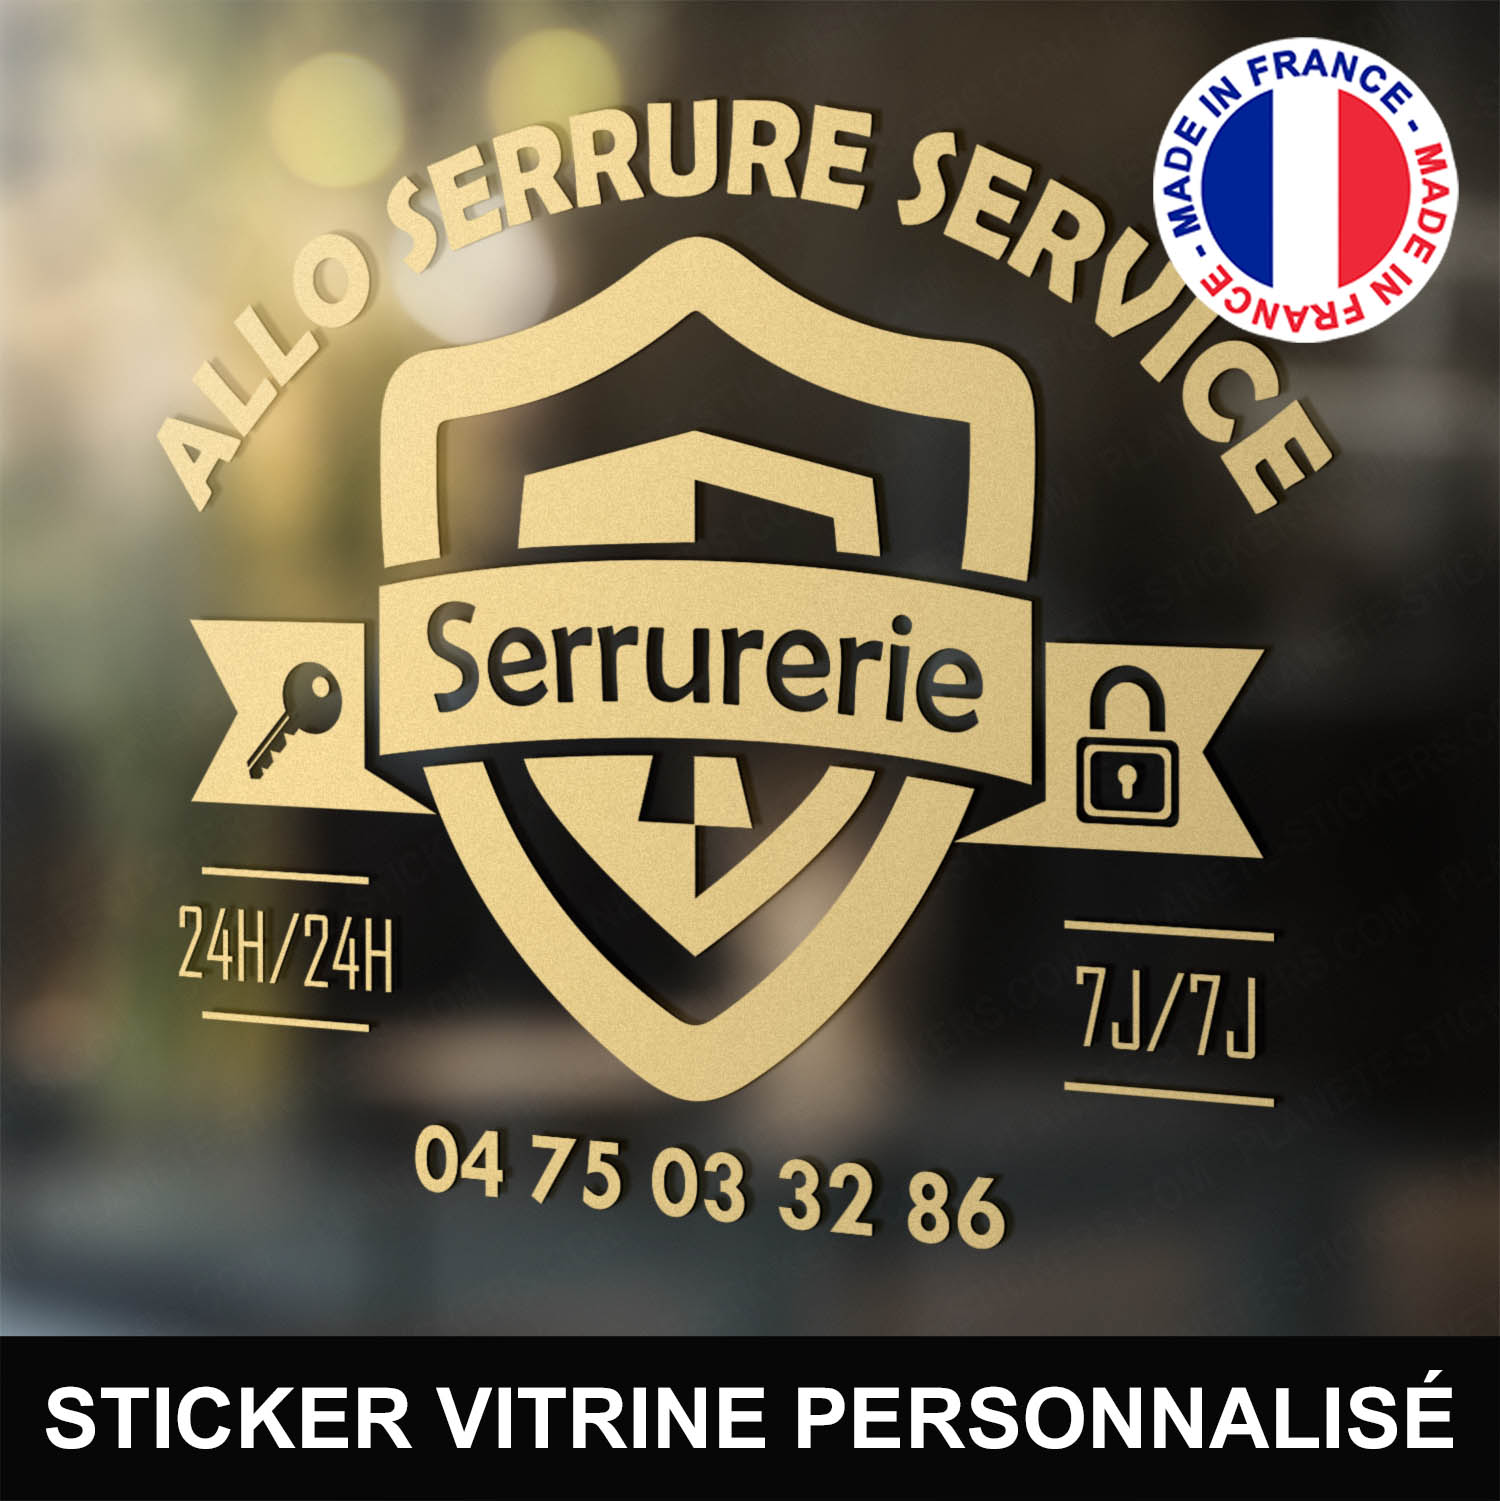 ref5serruriervitrine-stickers-commerce-serrurerie-vitrine-sticker-personnalisé-autocollant-pro-serrure-depannage-clef-professionnel